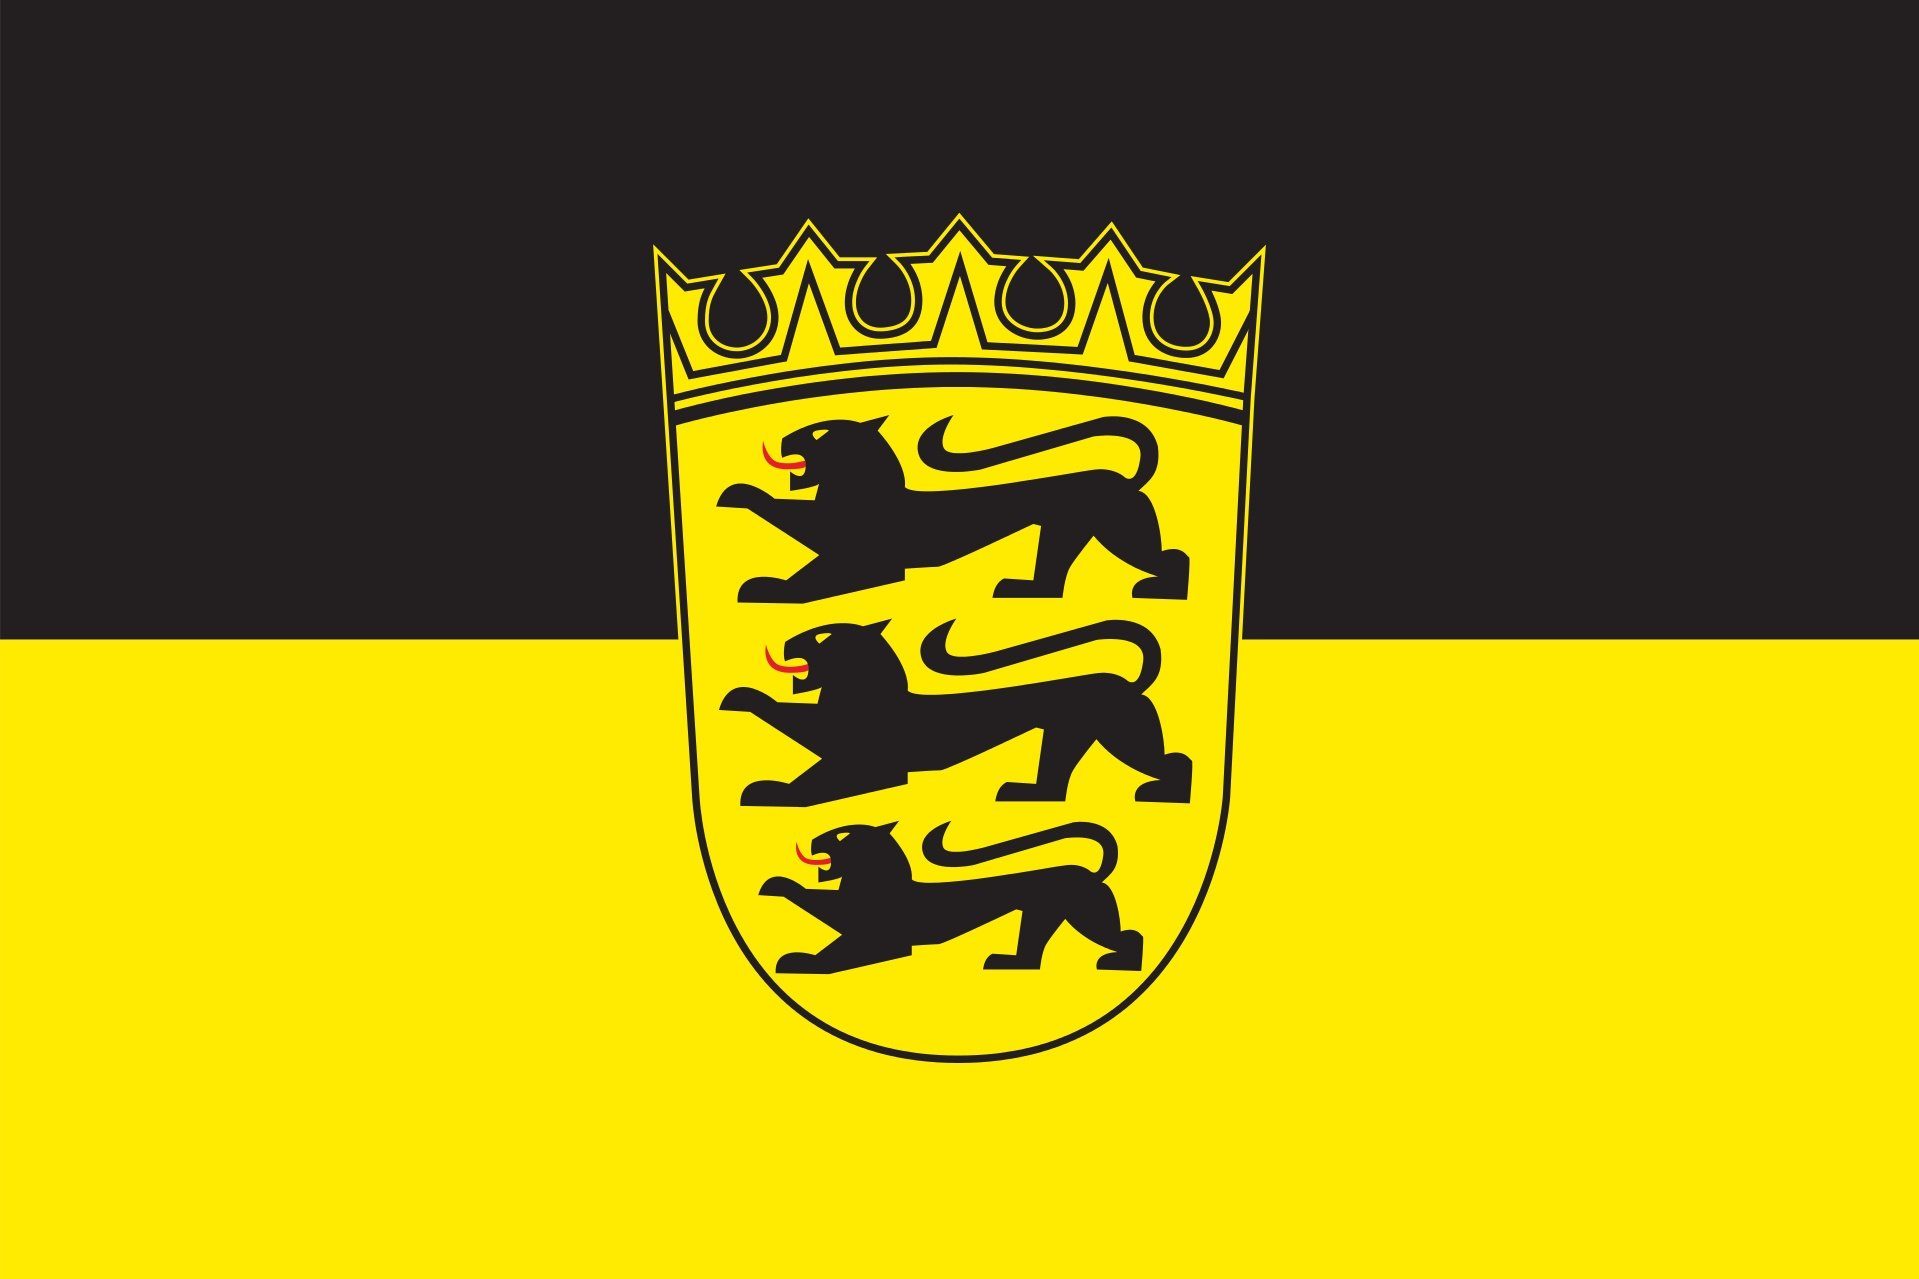 Flagge flaggenmeer g/m² Baden-Württemberg Querformat Wappen 160 mit